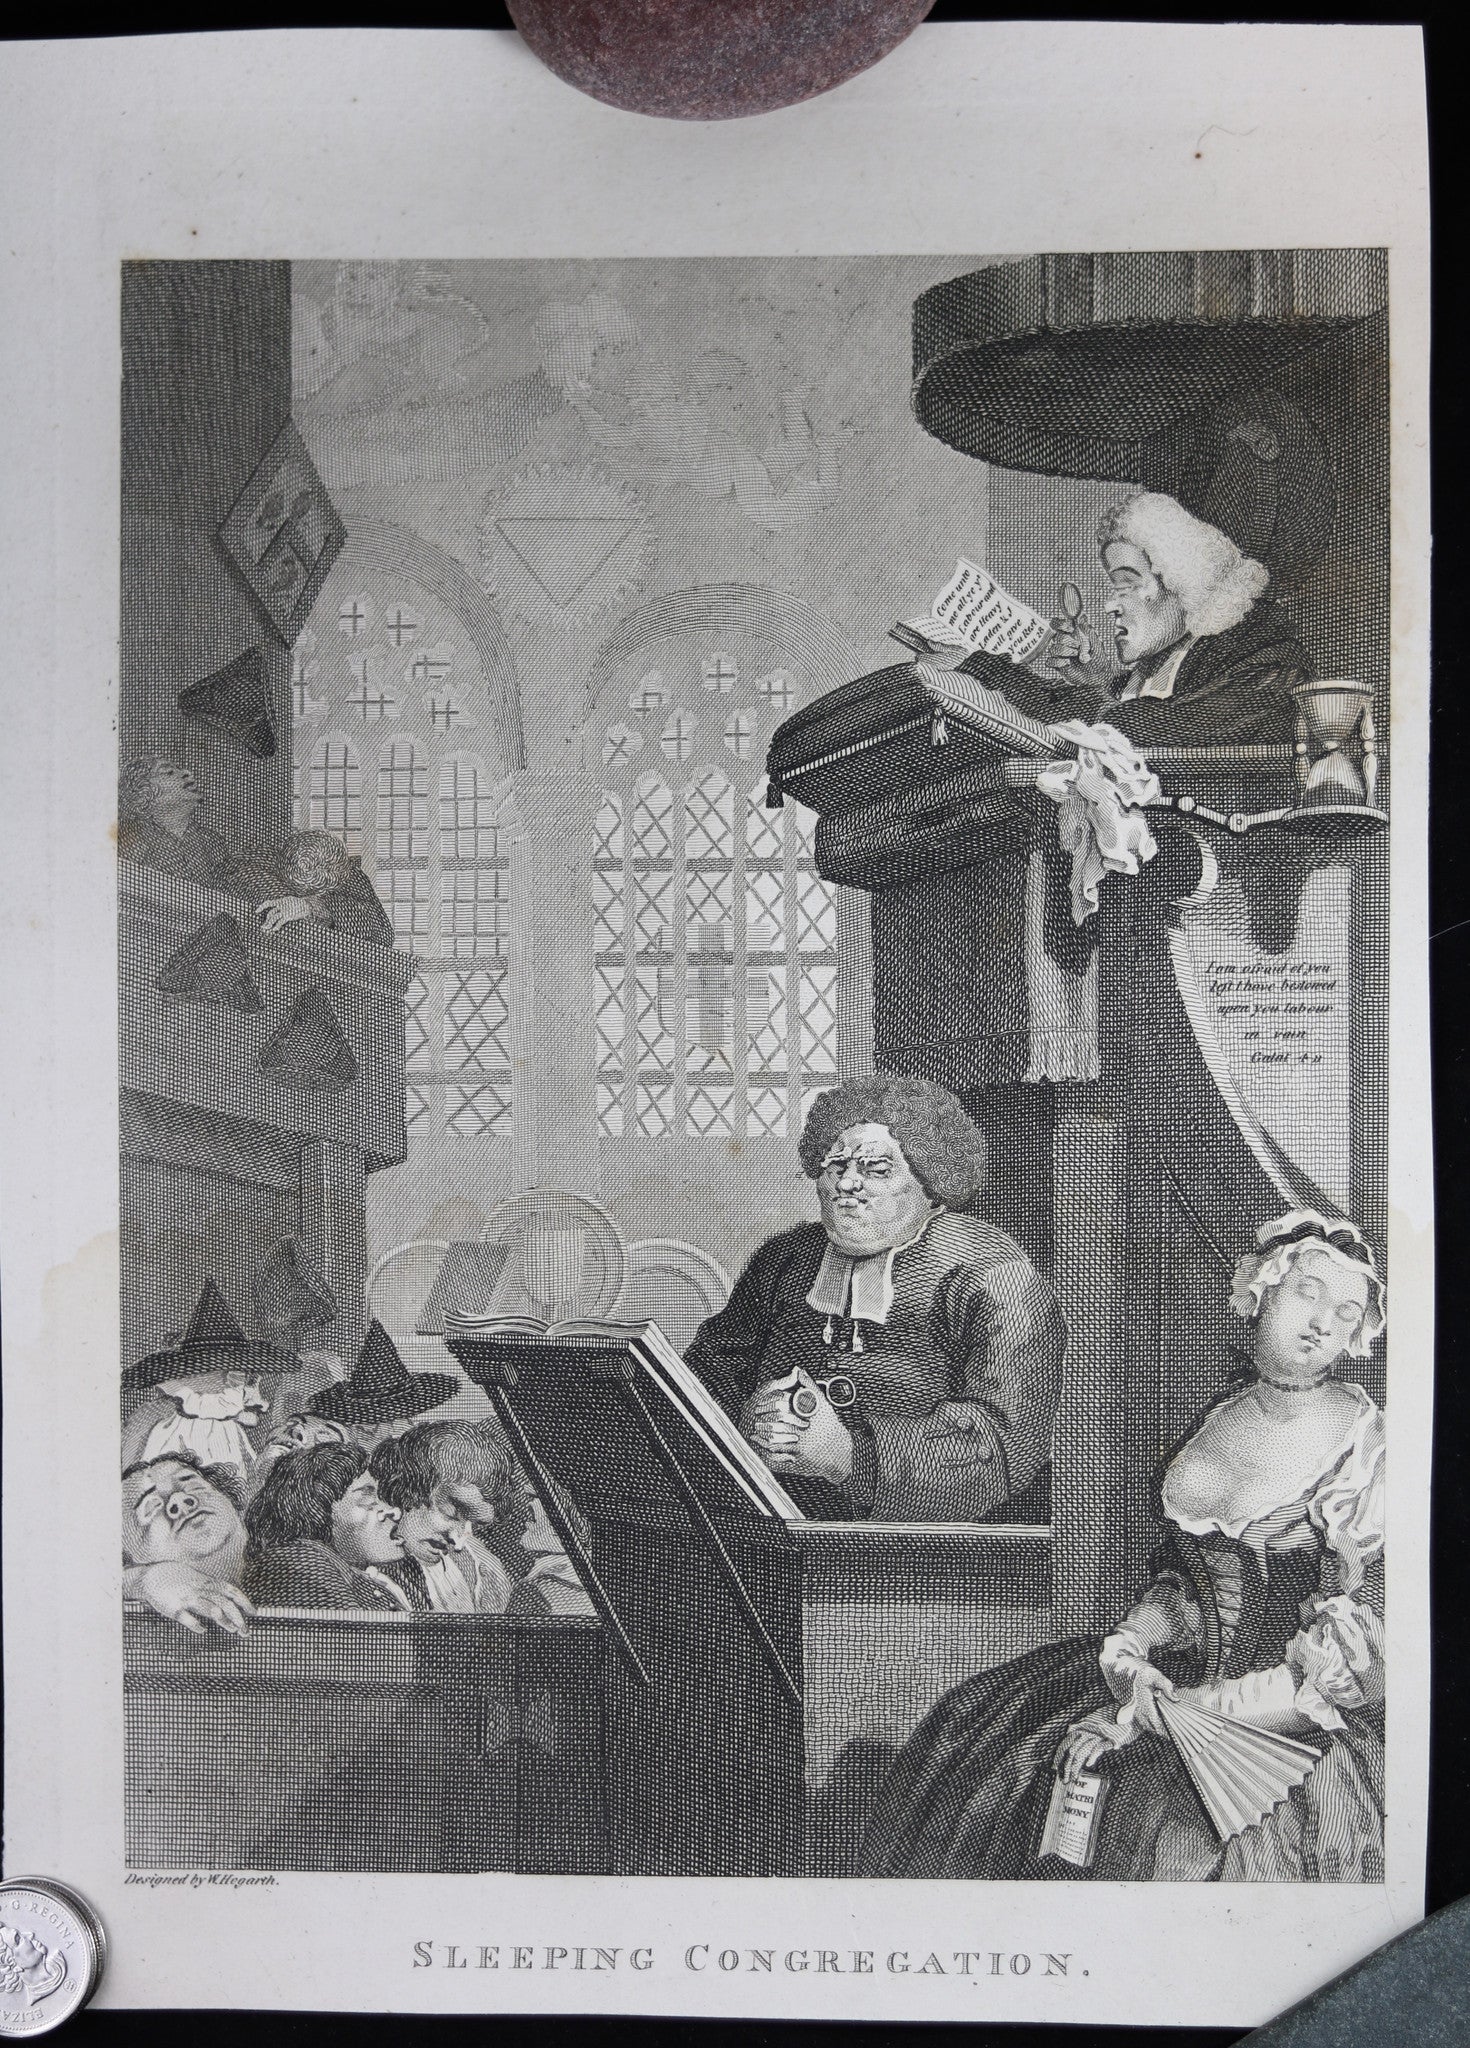 Print “Sleeping Congregation” after William Hogarth (1796-1806)